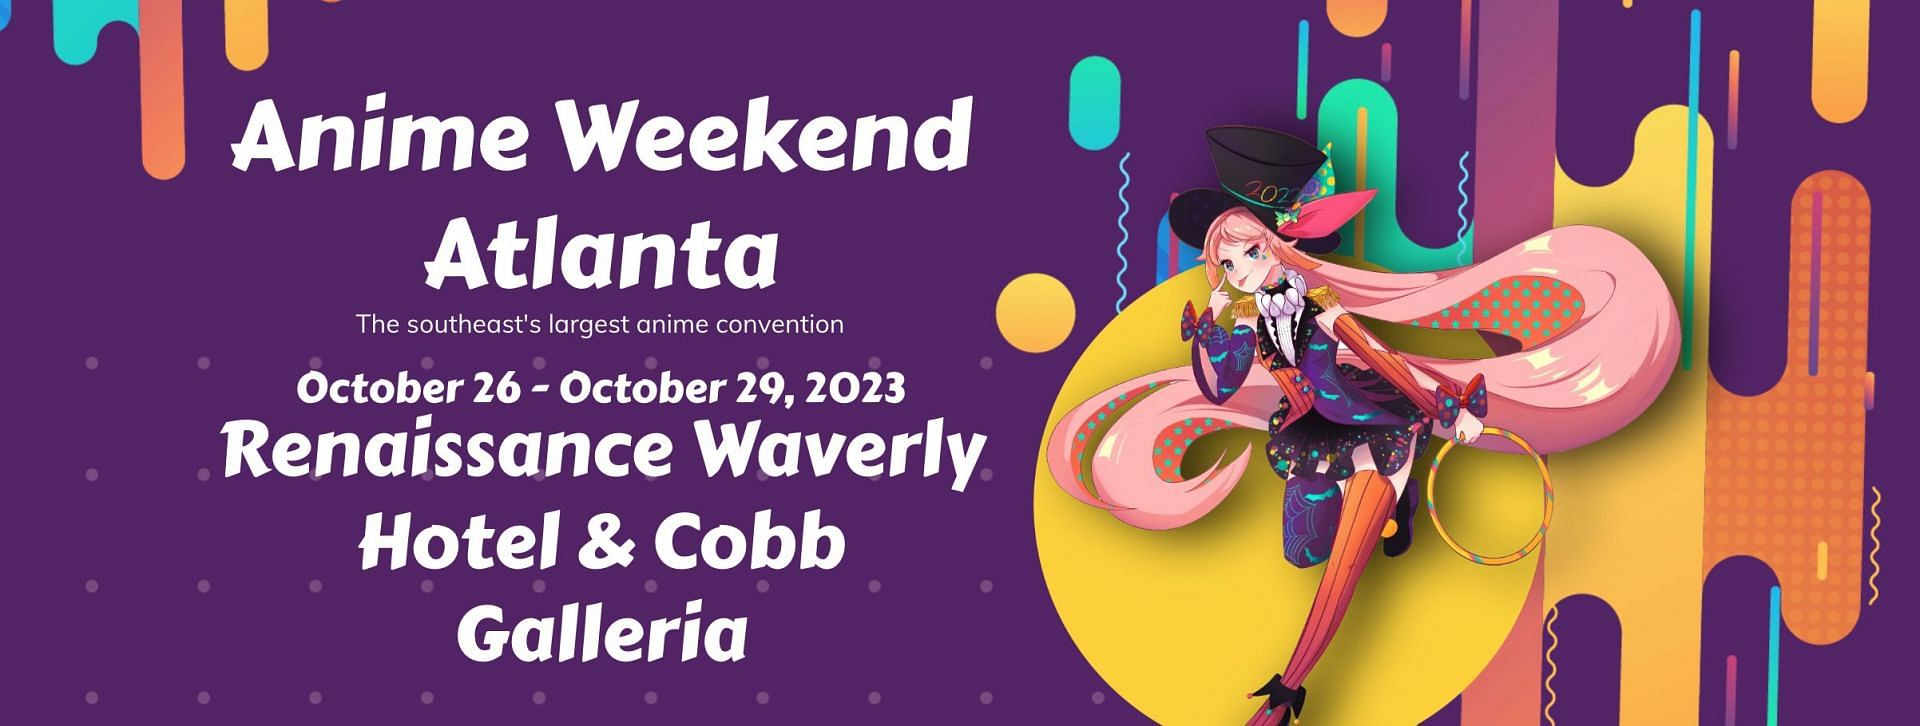 Anime Weekend Atlanta 2016 Information  AnimeConscom